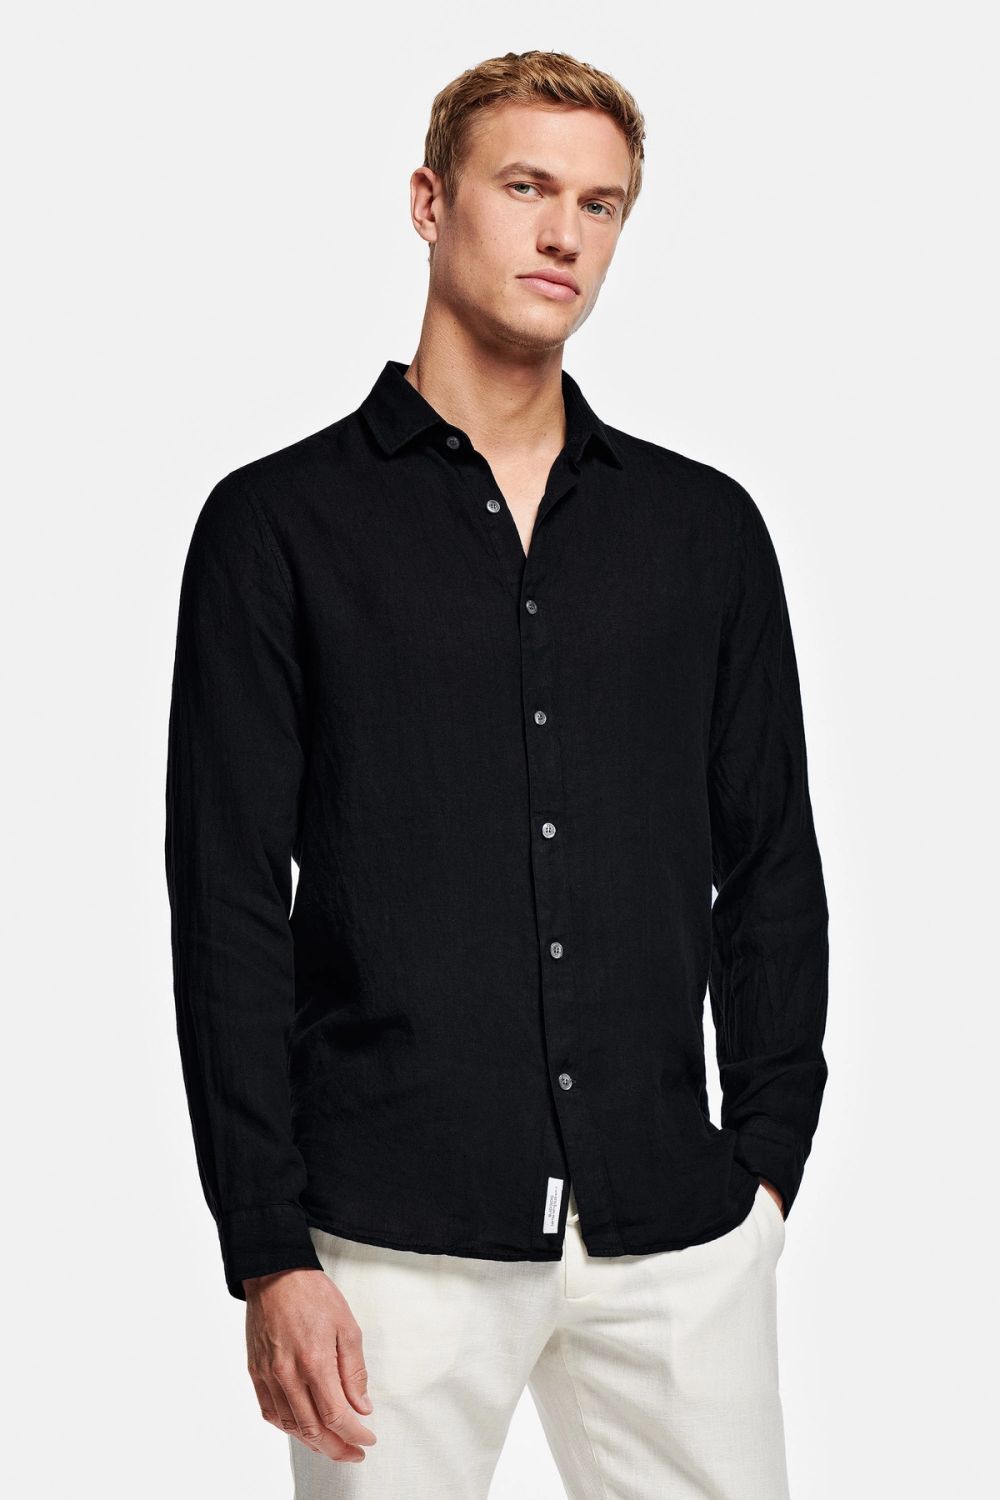 Blackjacks * The Linen Shirt